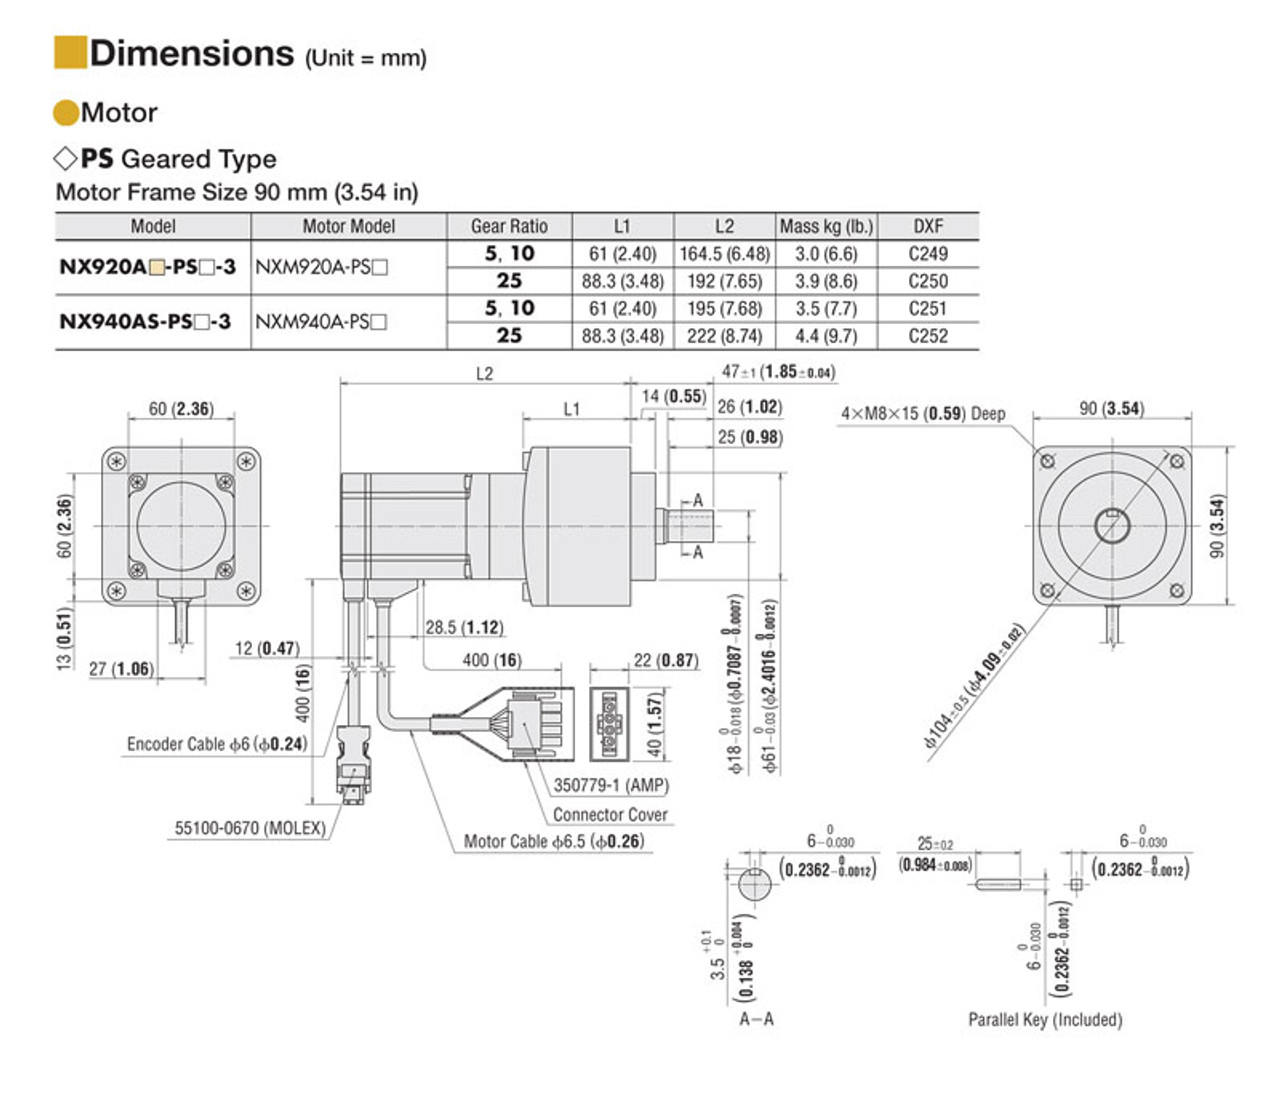 NX920AC-PS10-3 - Dimensions